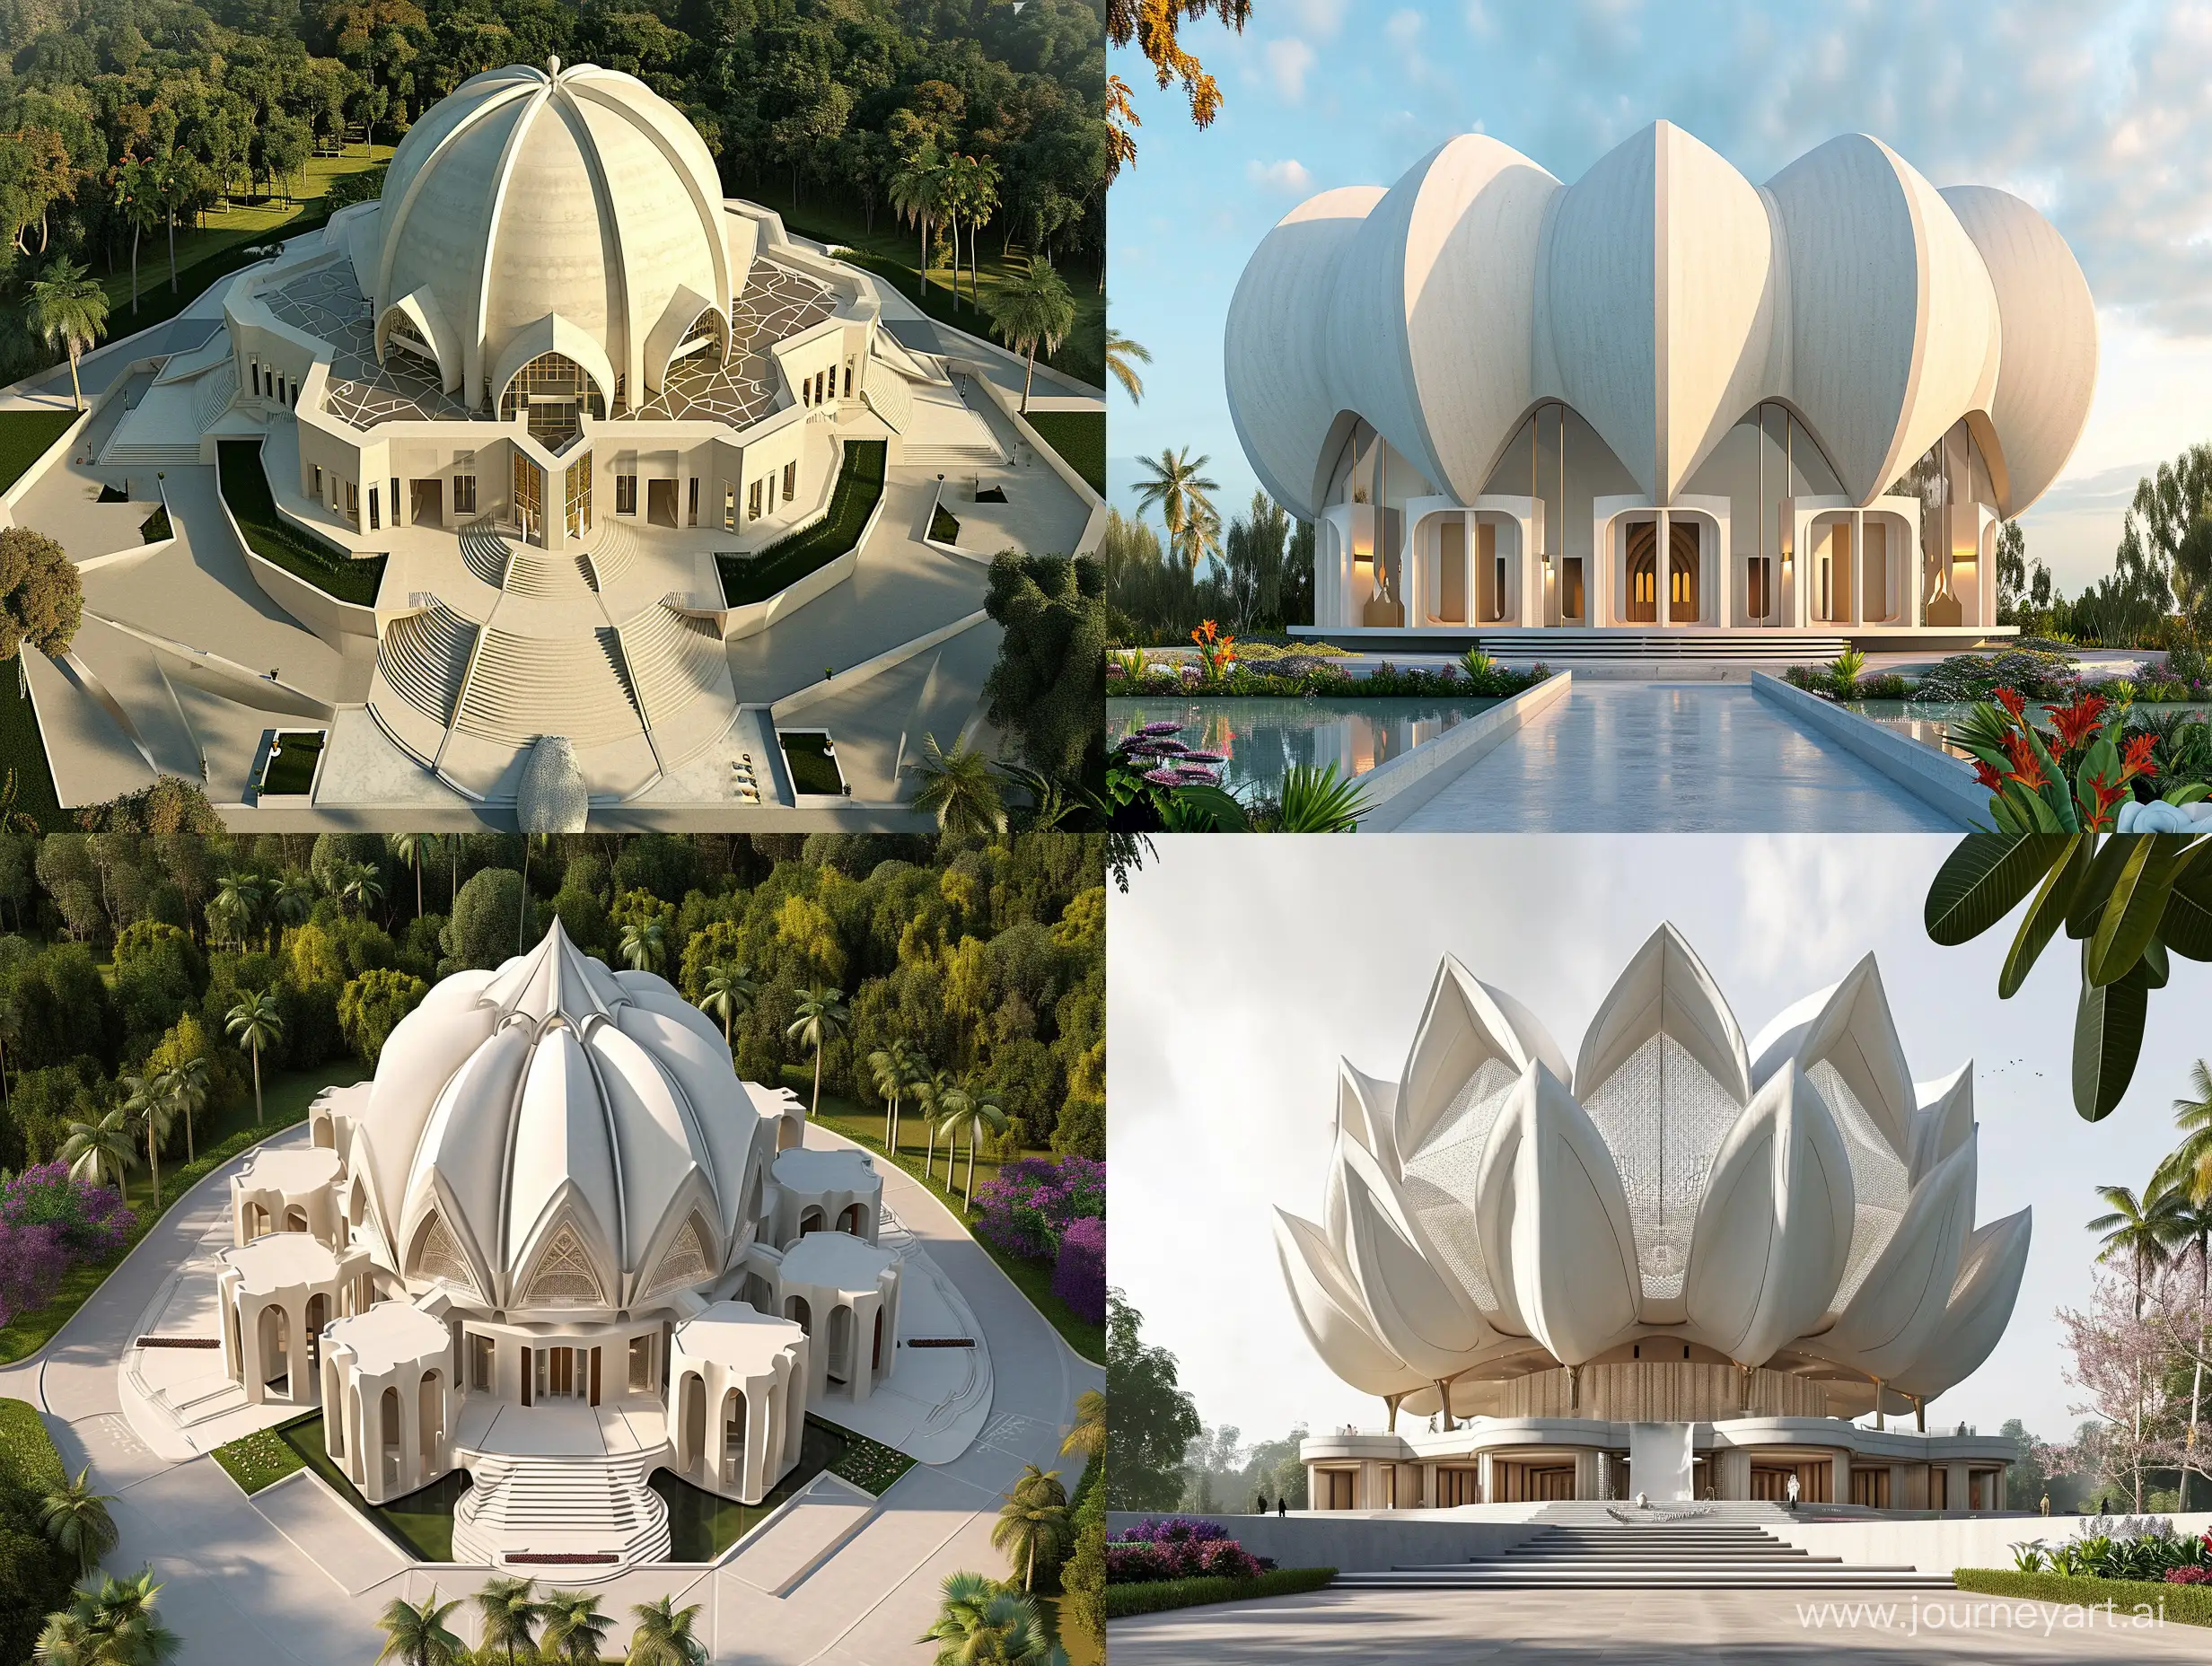 Symmetrical-Bahai-Temple-with-9-Entrances-Brazilian-Culture-Inspired